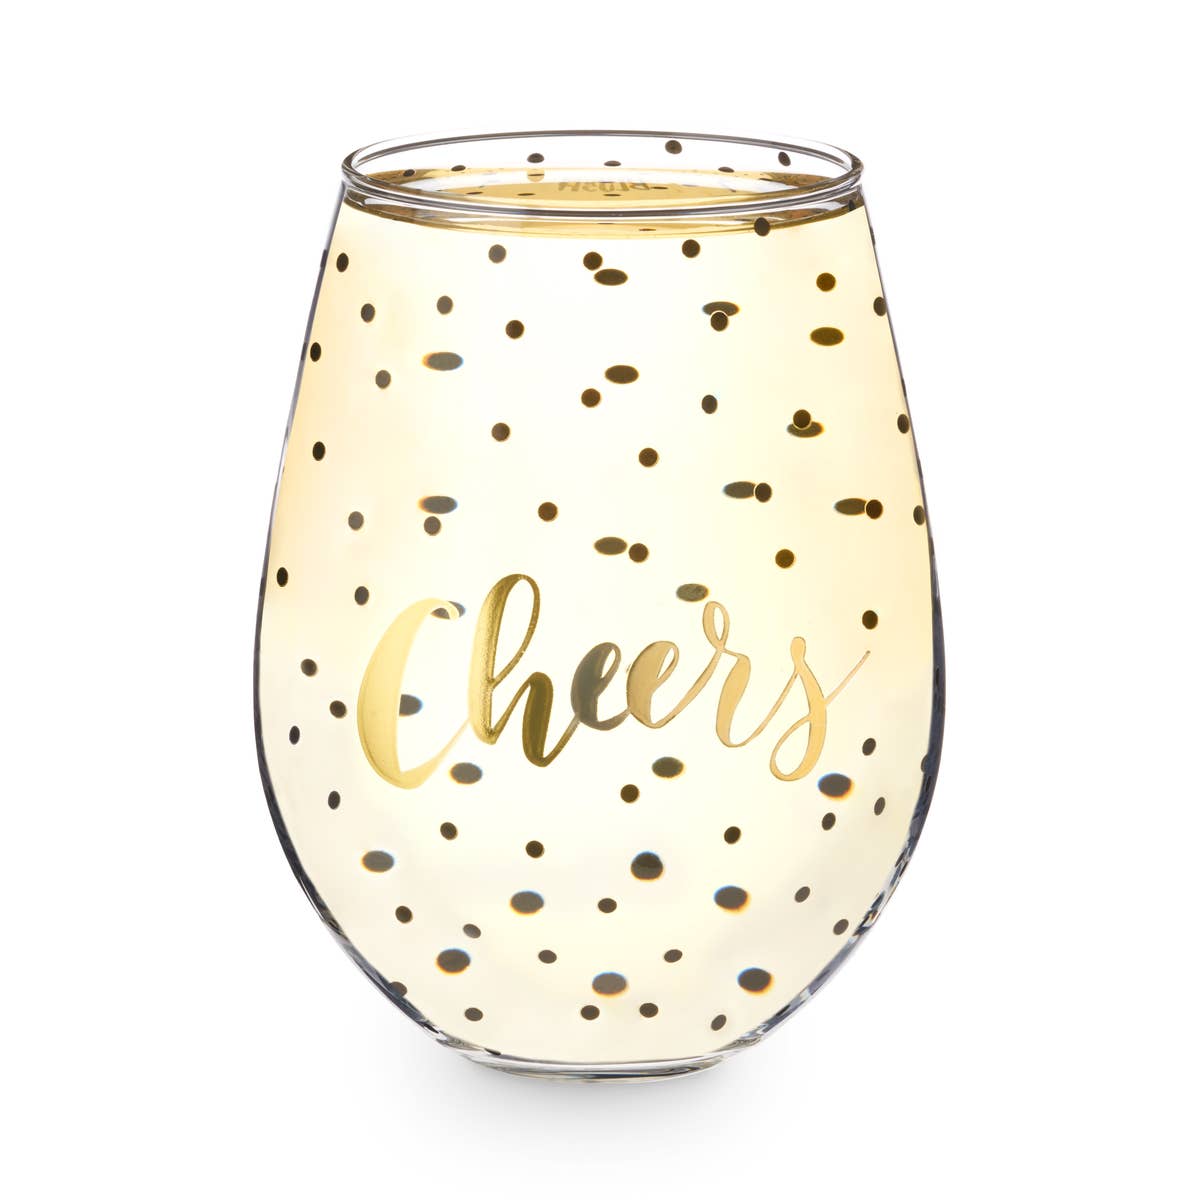 Cheers 30 oz Stemless Wine Glass